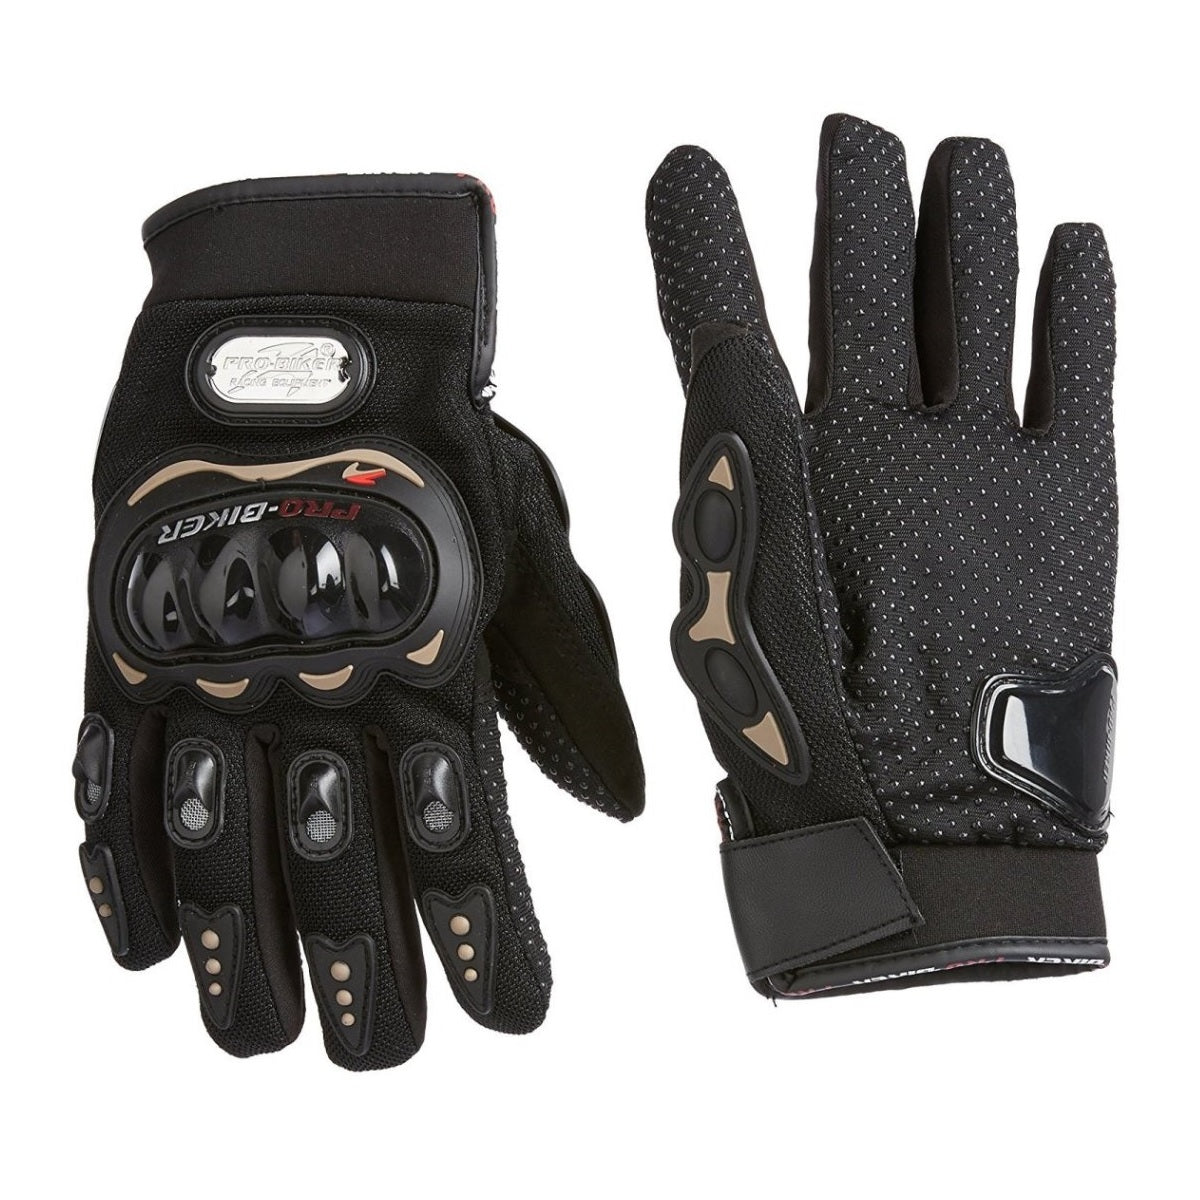 OTG Probiker Motorcycle Gloves - Outdoor Travel Gear 1